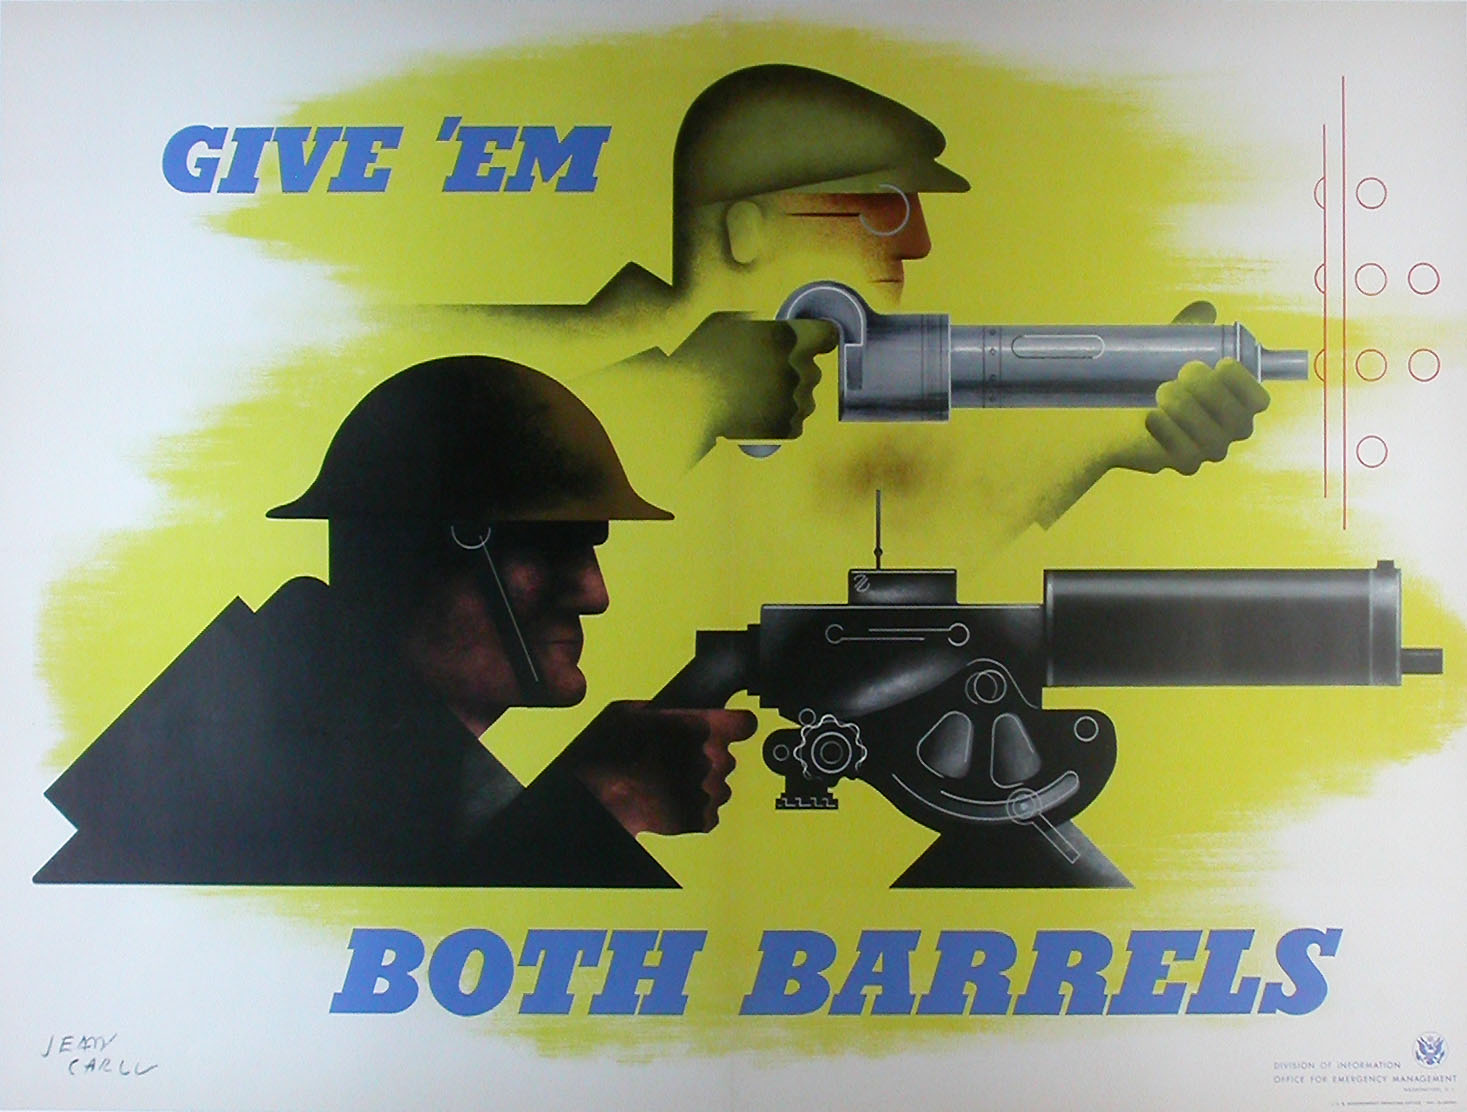 Give 'em Both Barrels